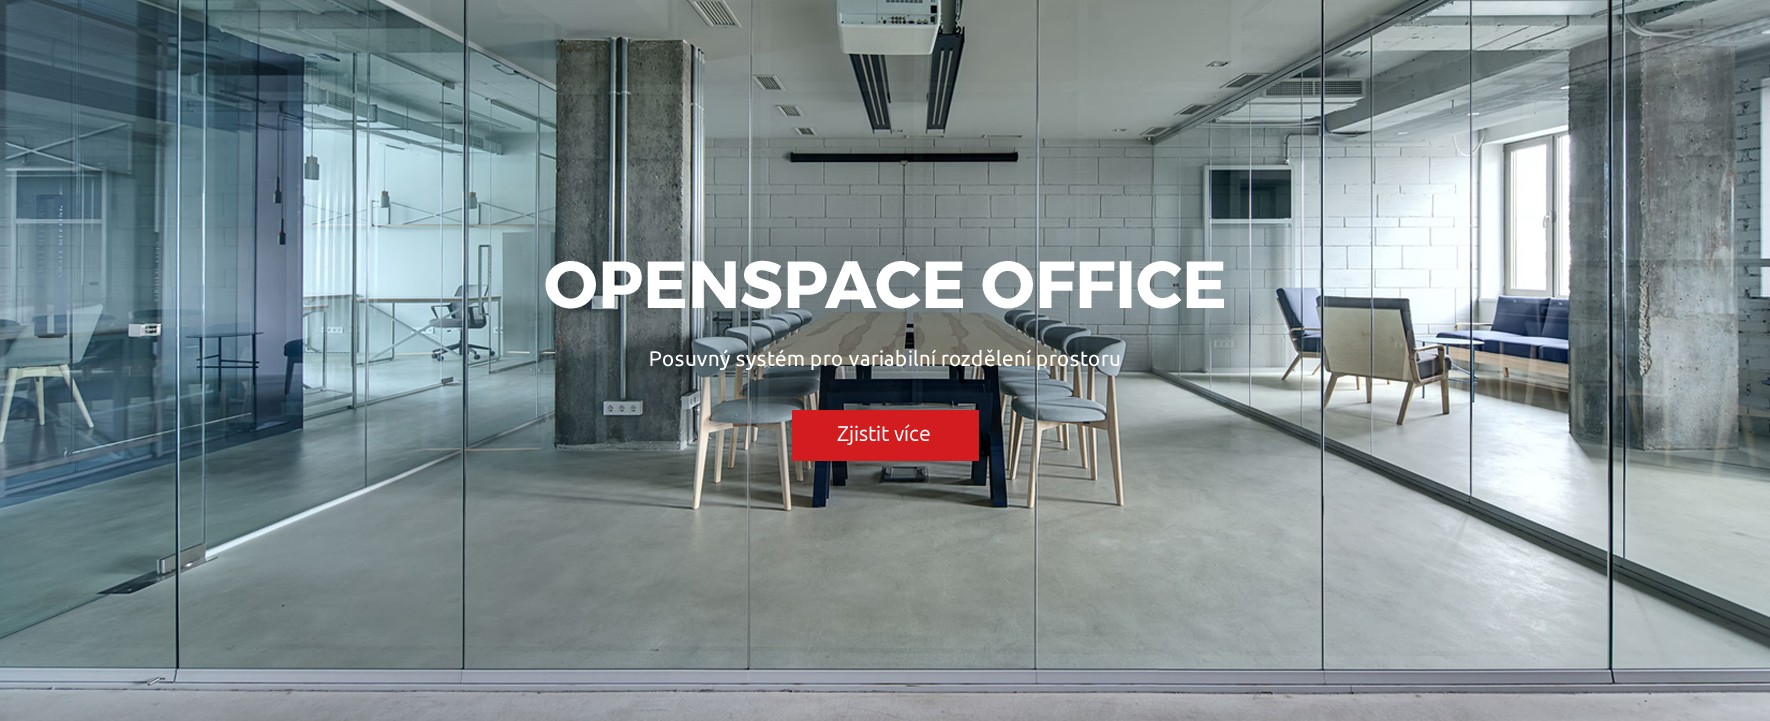 Openspace office